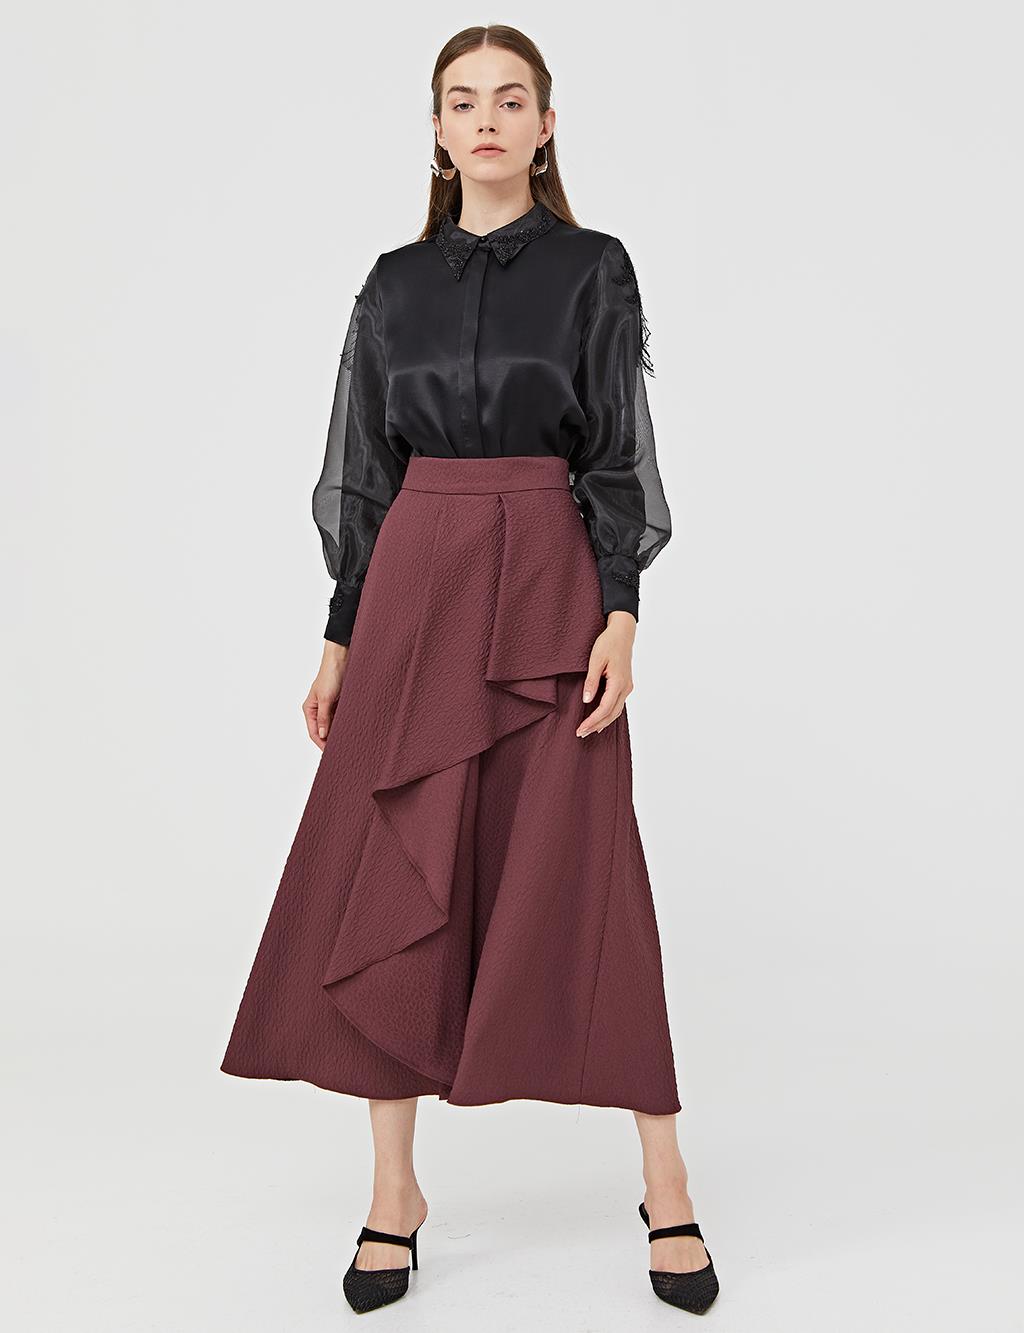 Asymmetrical Cut Skirt A21 12034 Burgundy